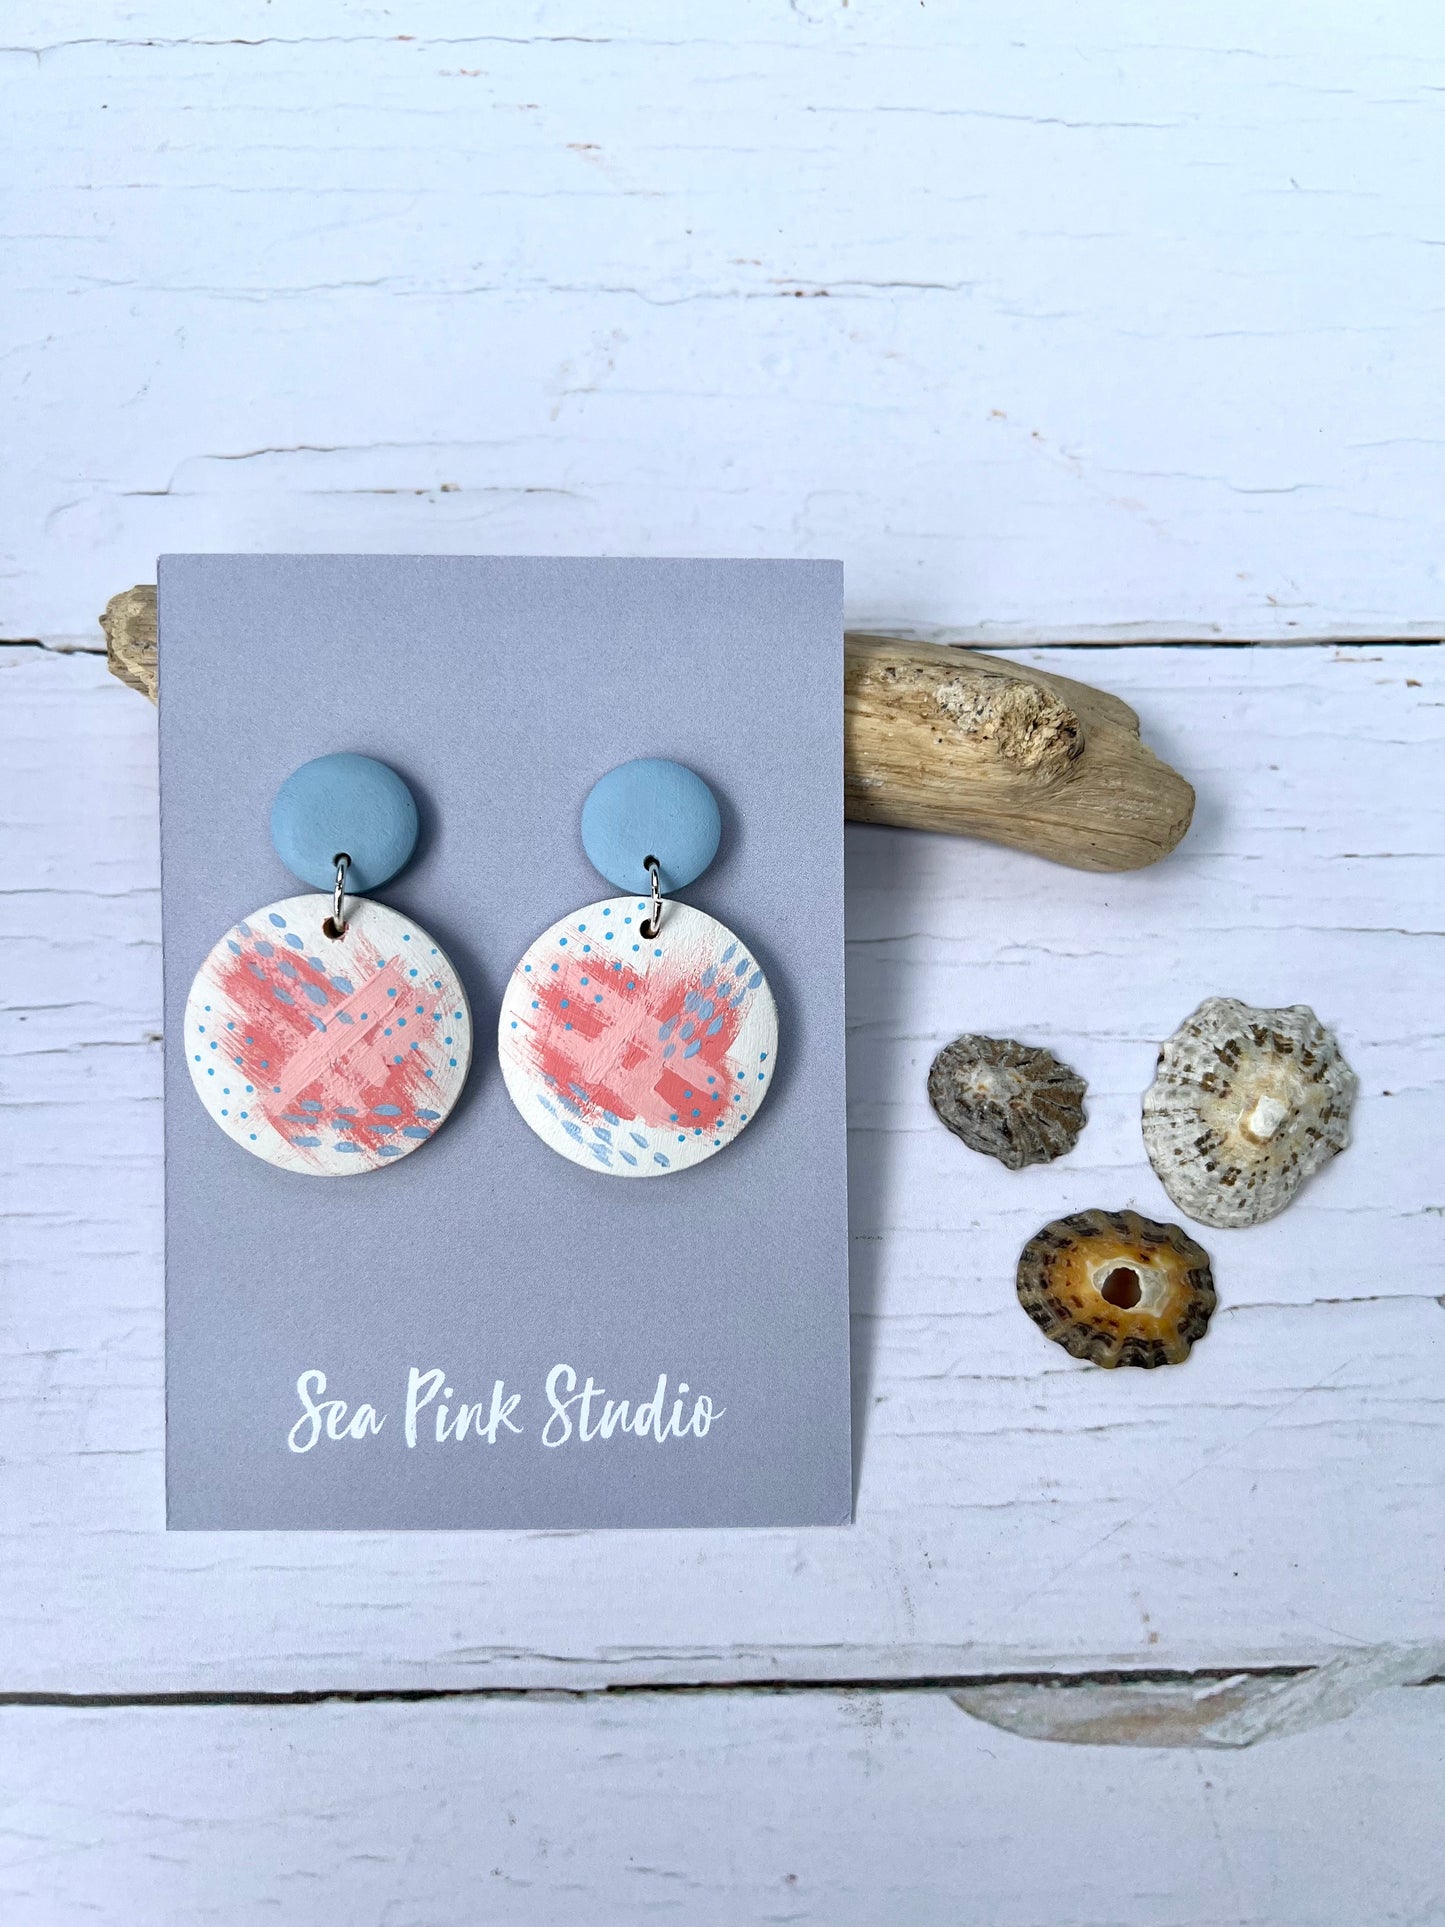 Handpainted blue, pink & white wooden bead earrings